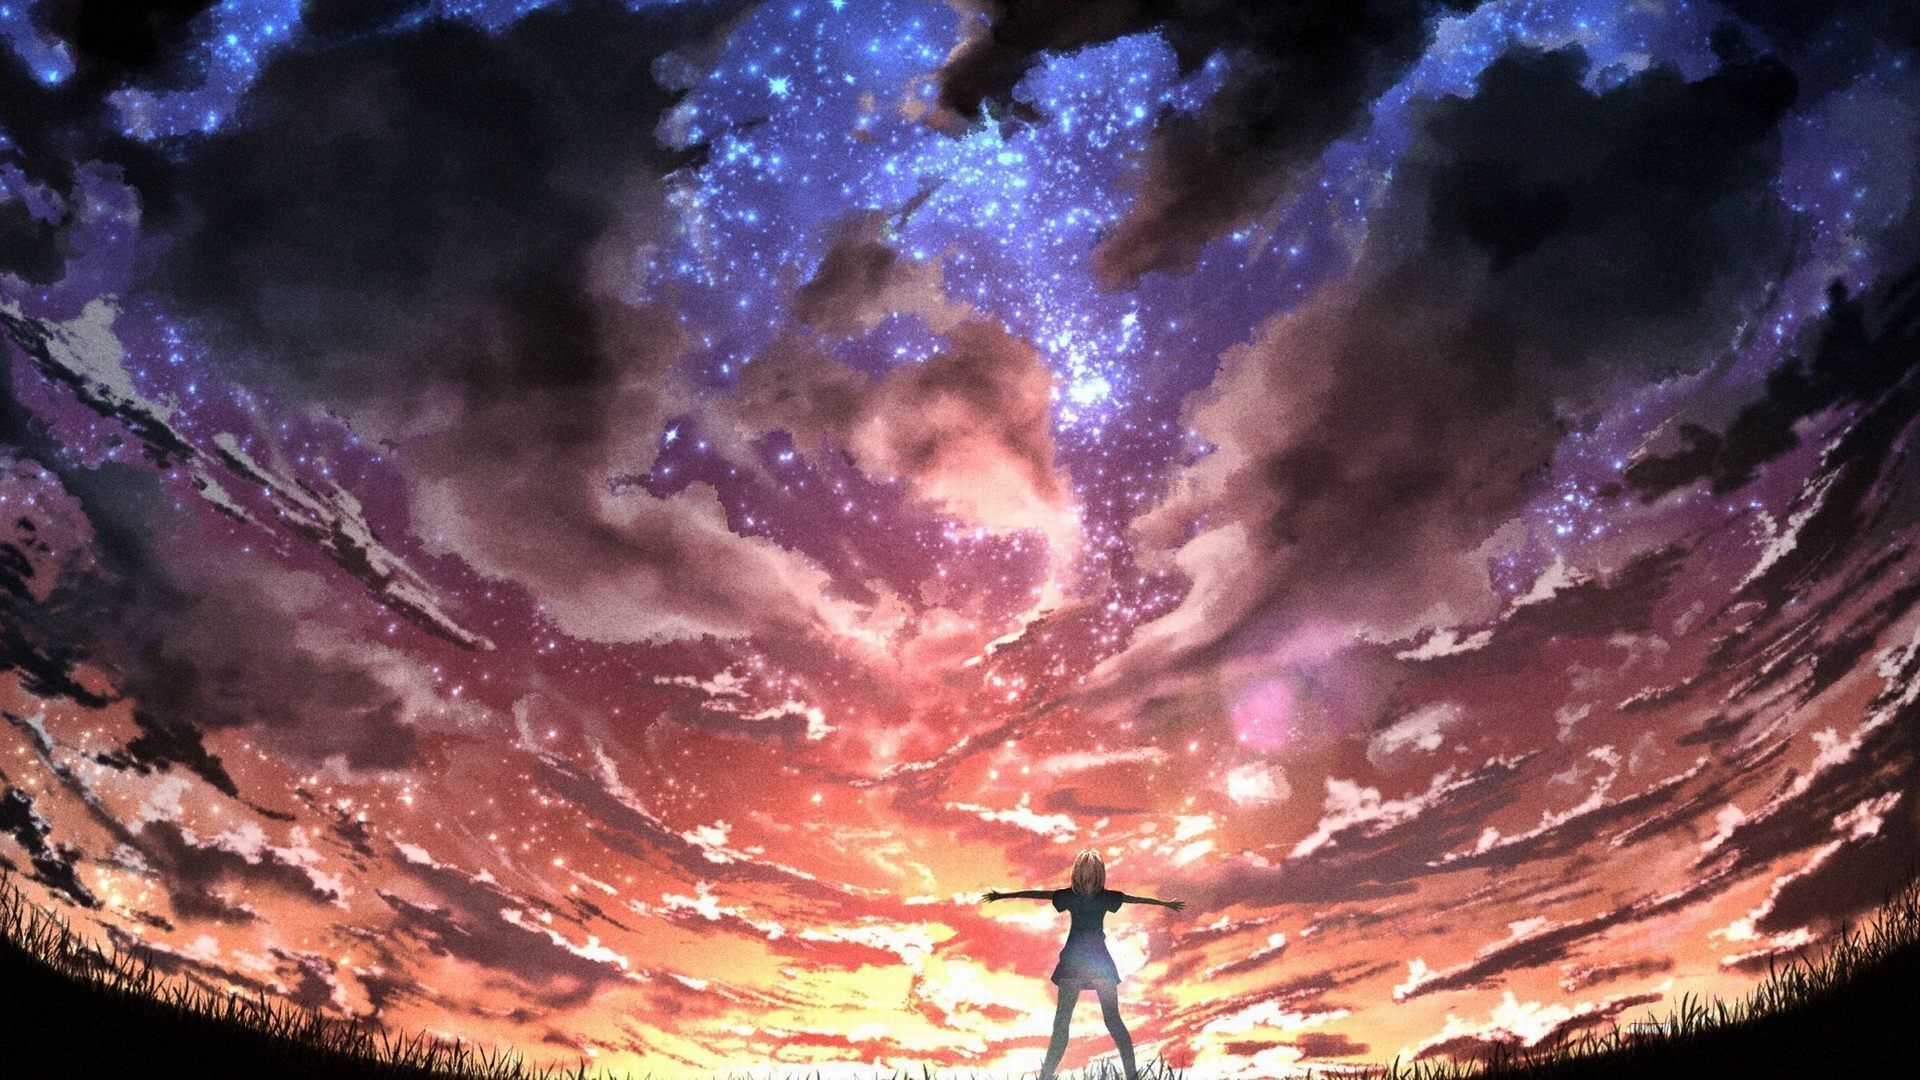 Anime Art Night Sky Scenery 4K wallpaper download